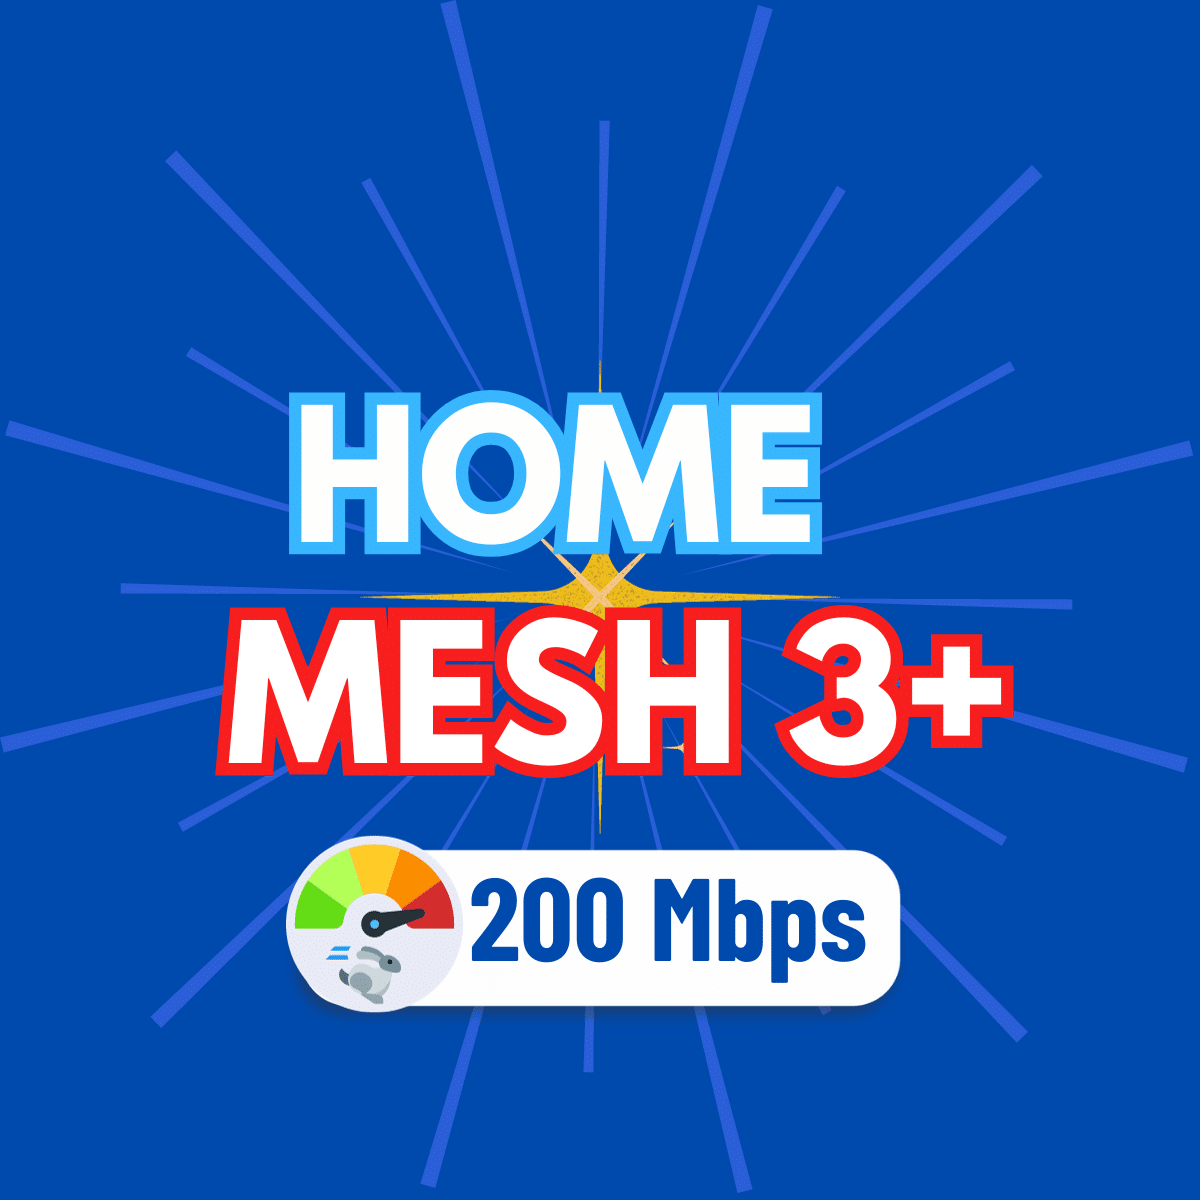 Home Mesh 3 Plus, net 3+, home net 3+